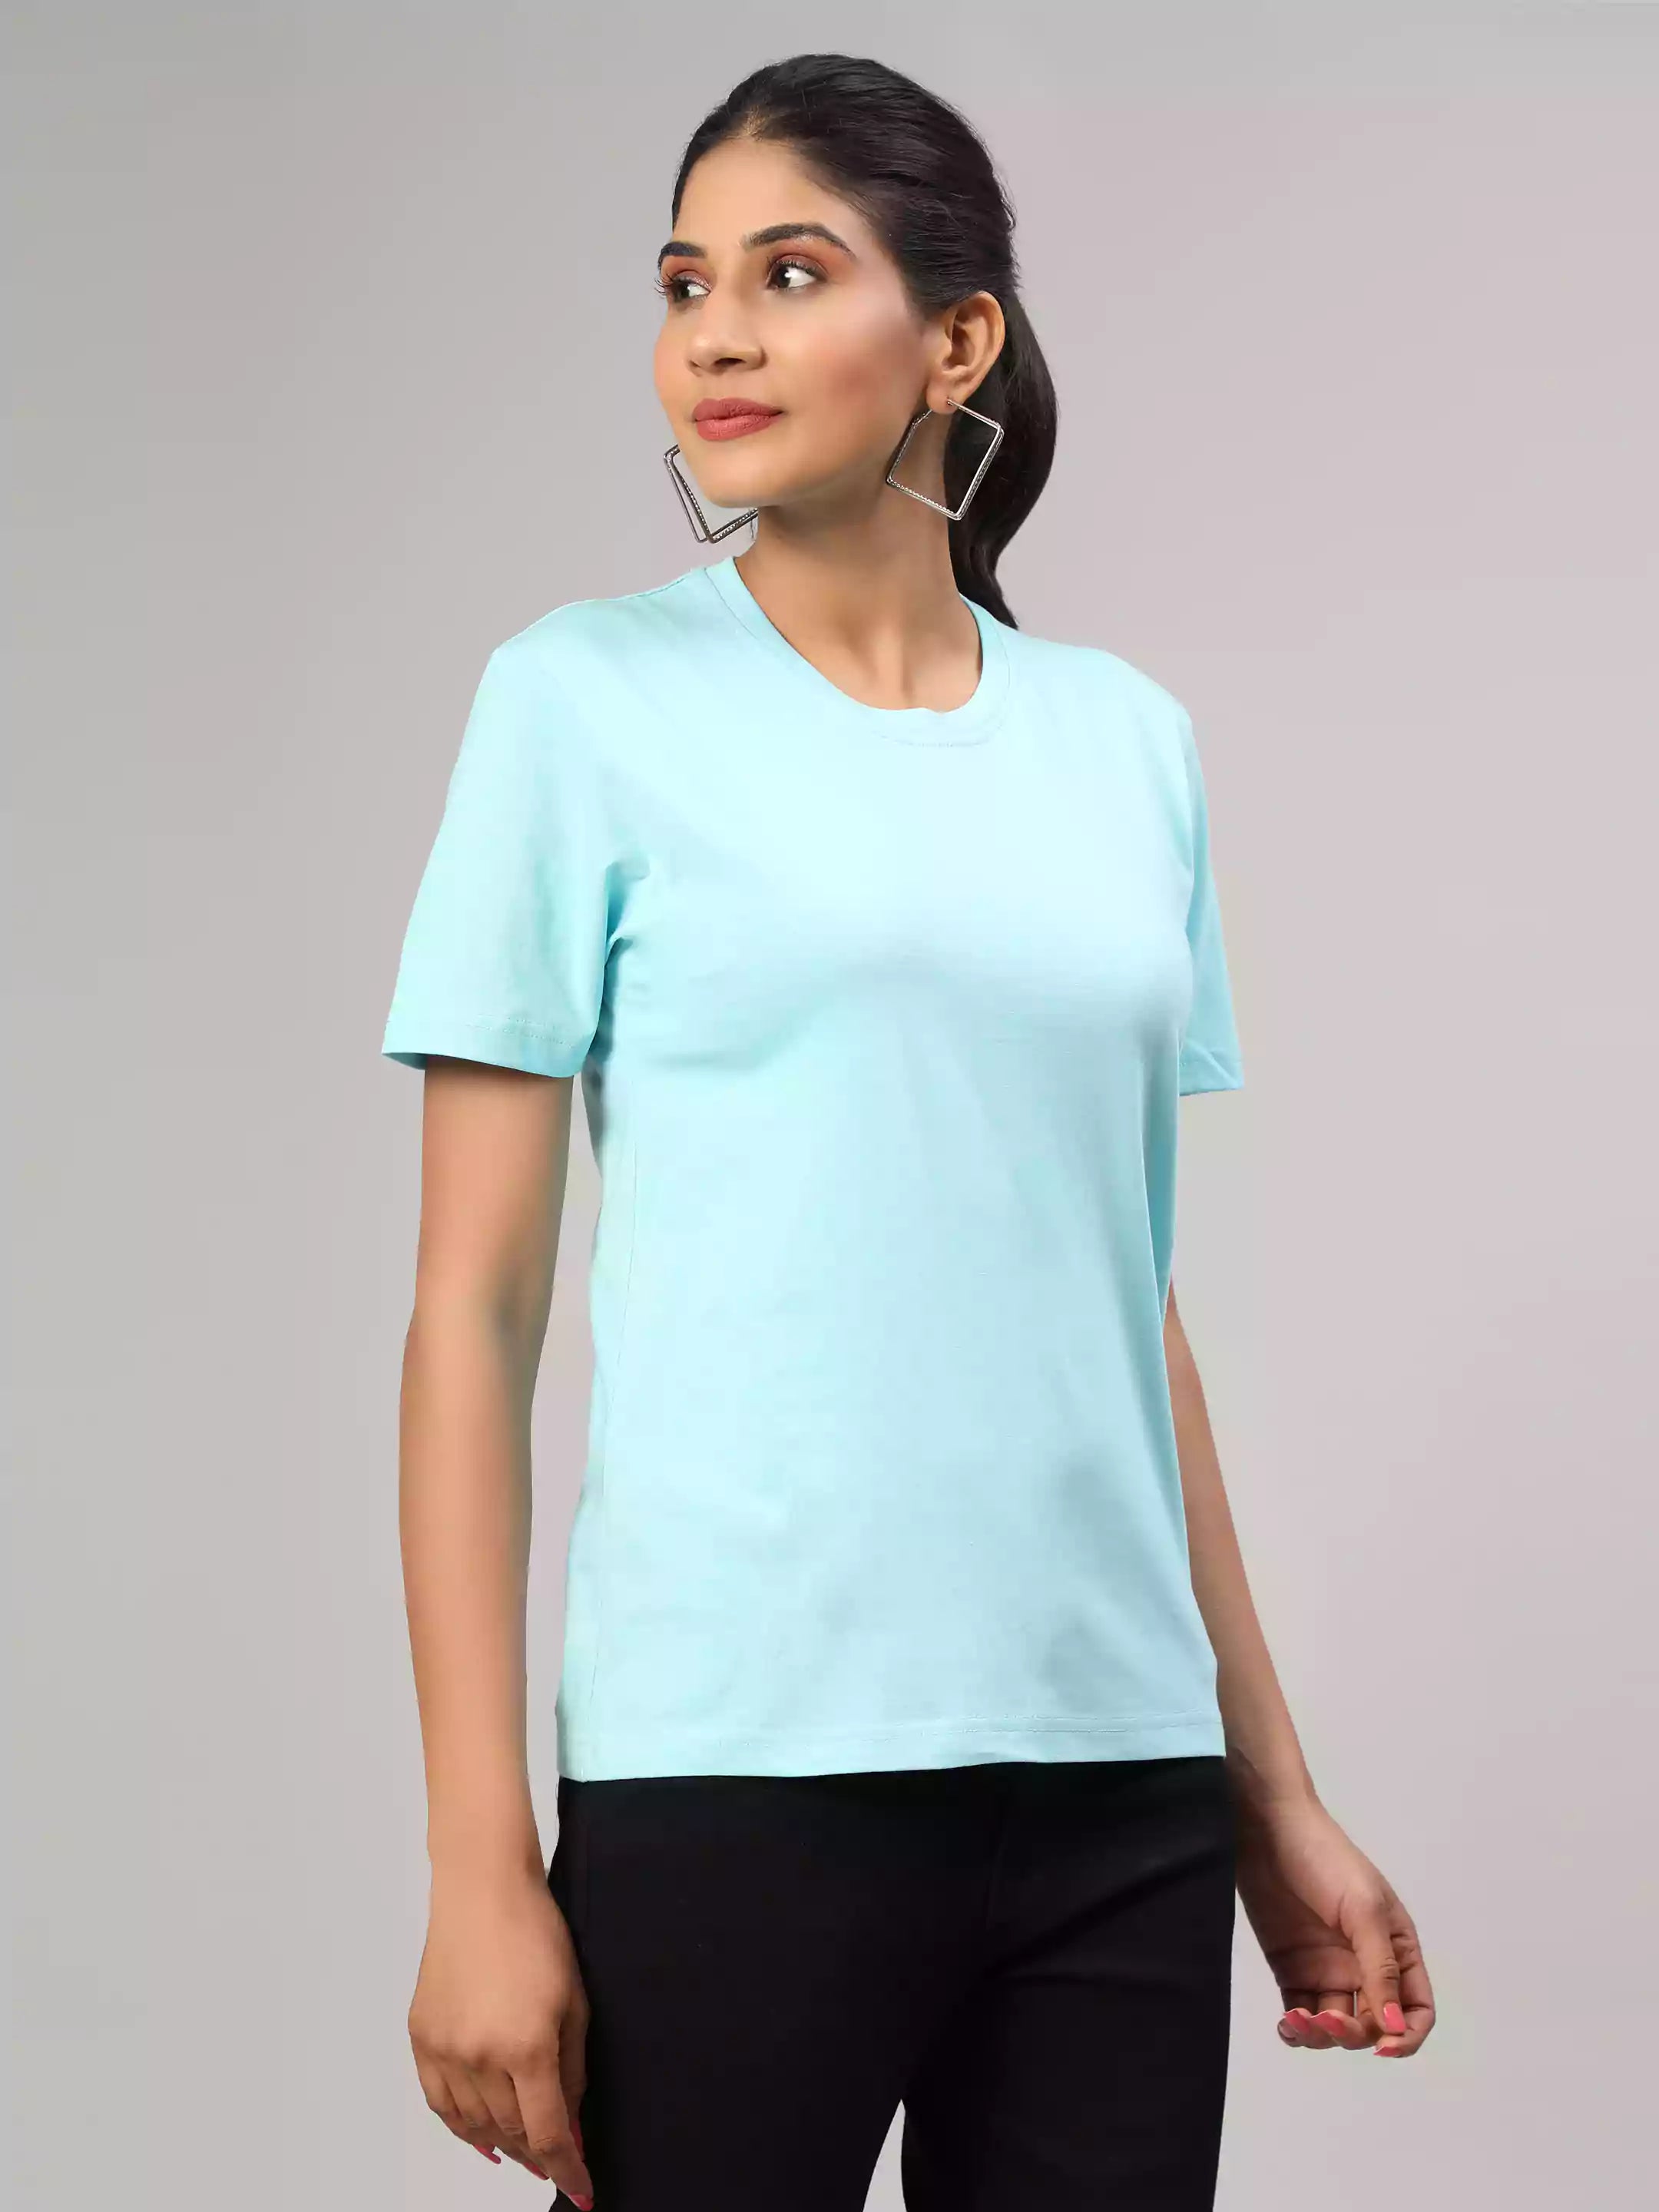 Aqua Blue - Sukhiaatma Unisex Basic T-shirt